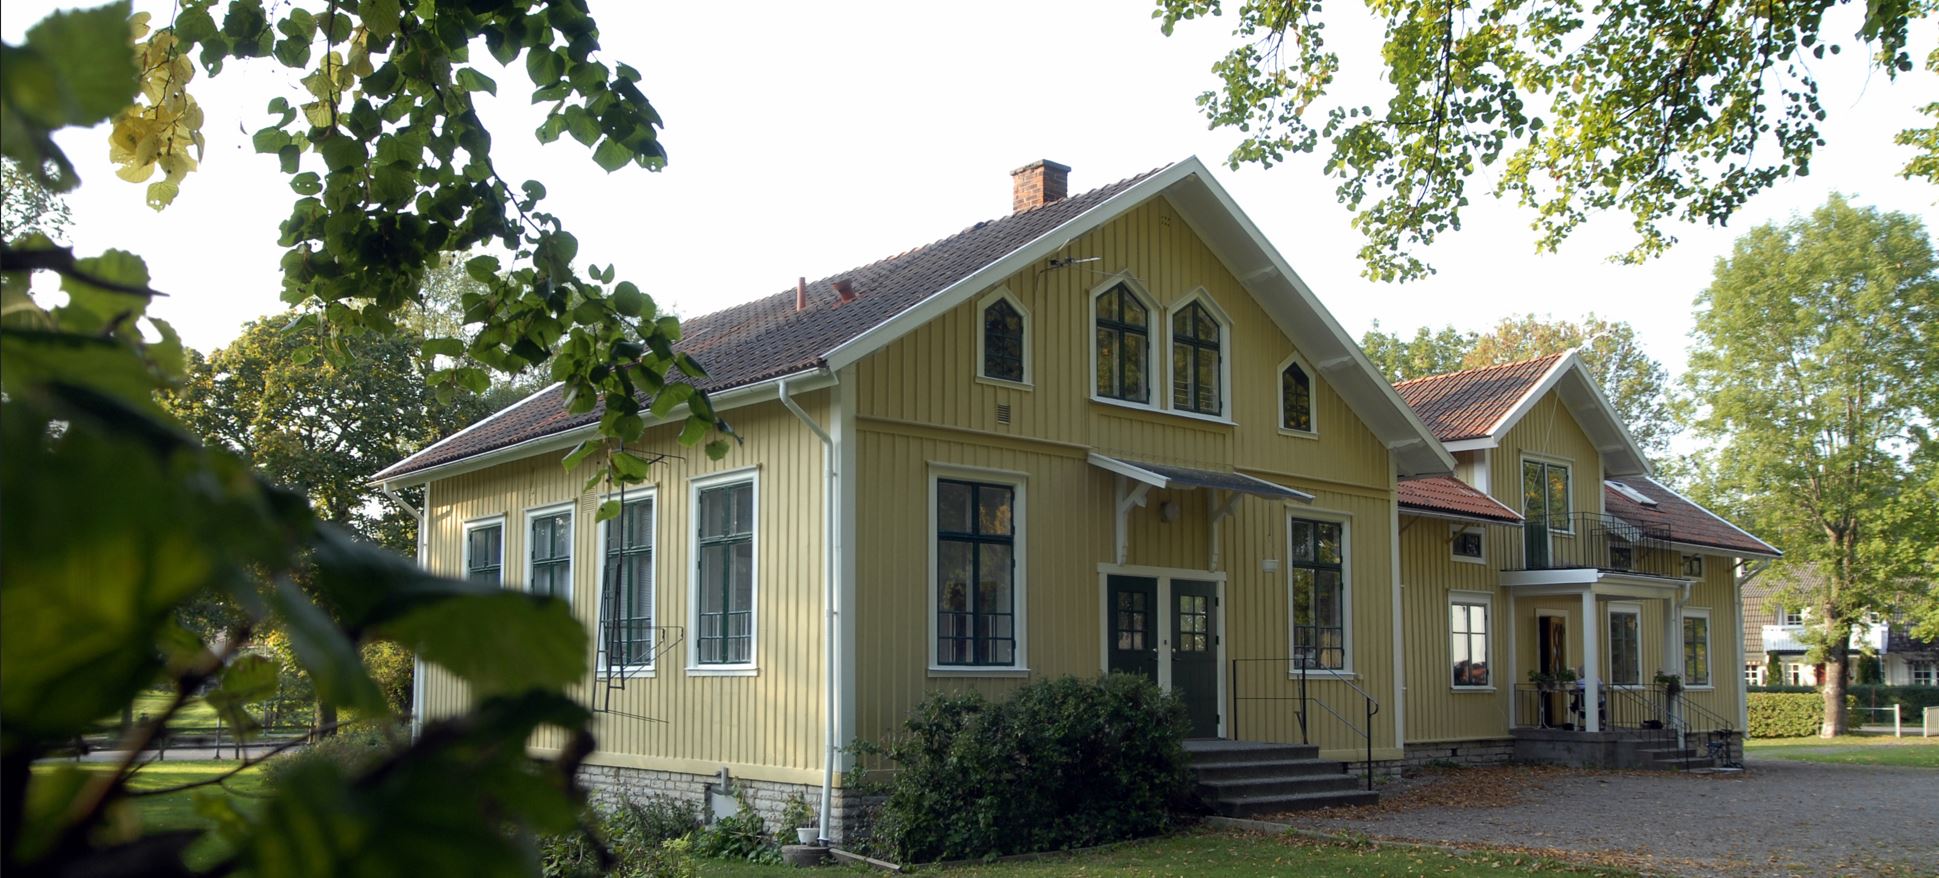 Klostergårdens Vandrarhem i Varnhem